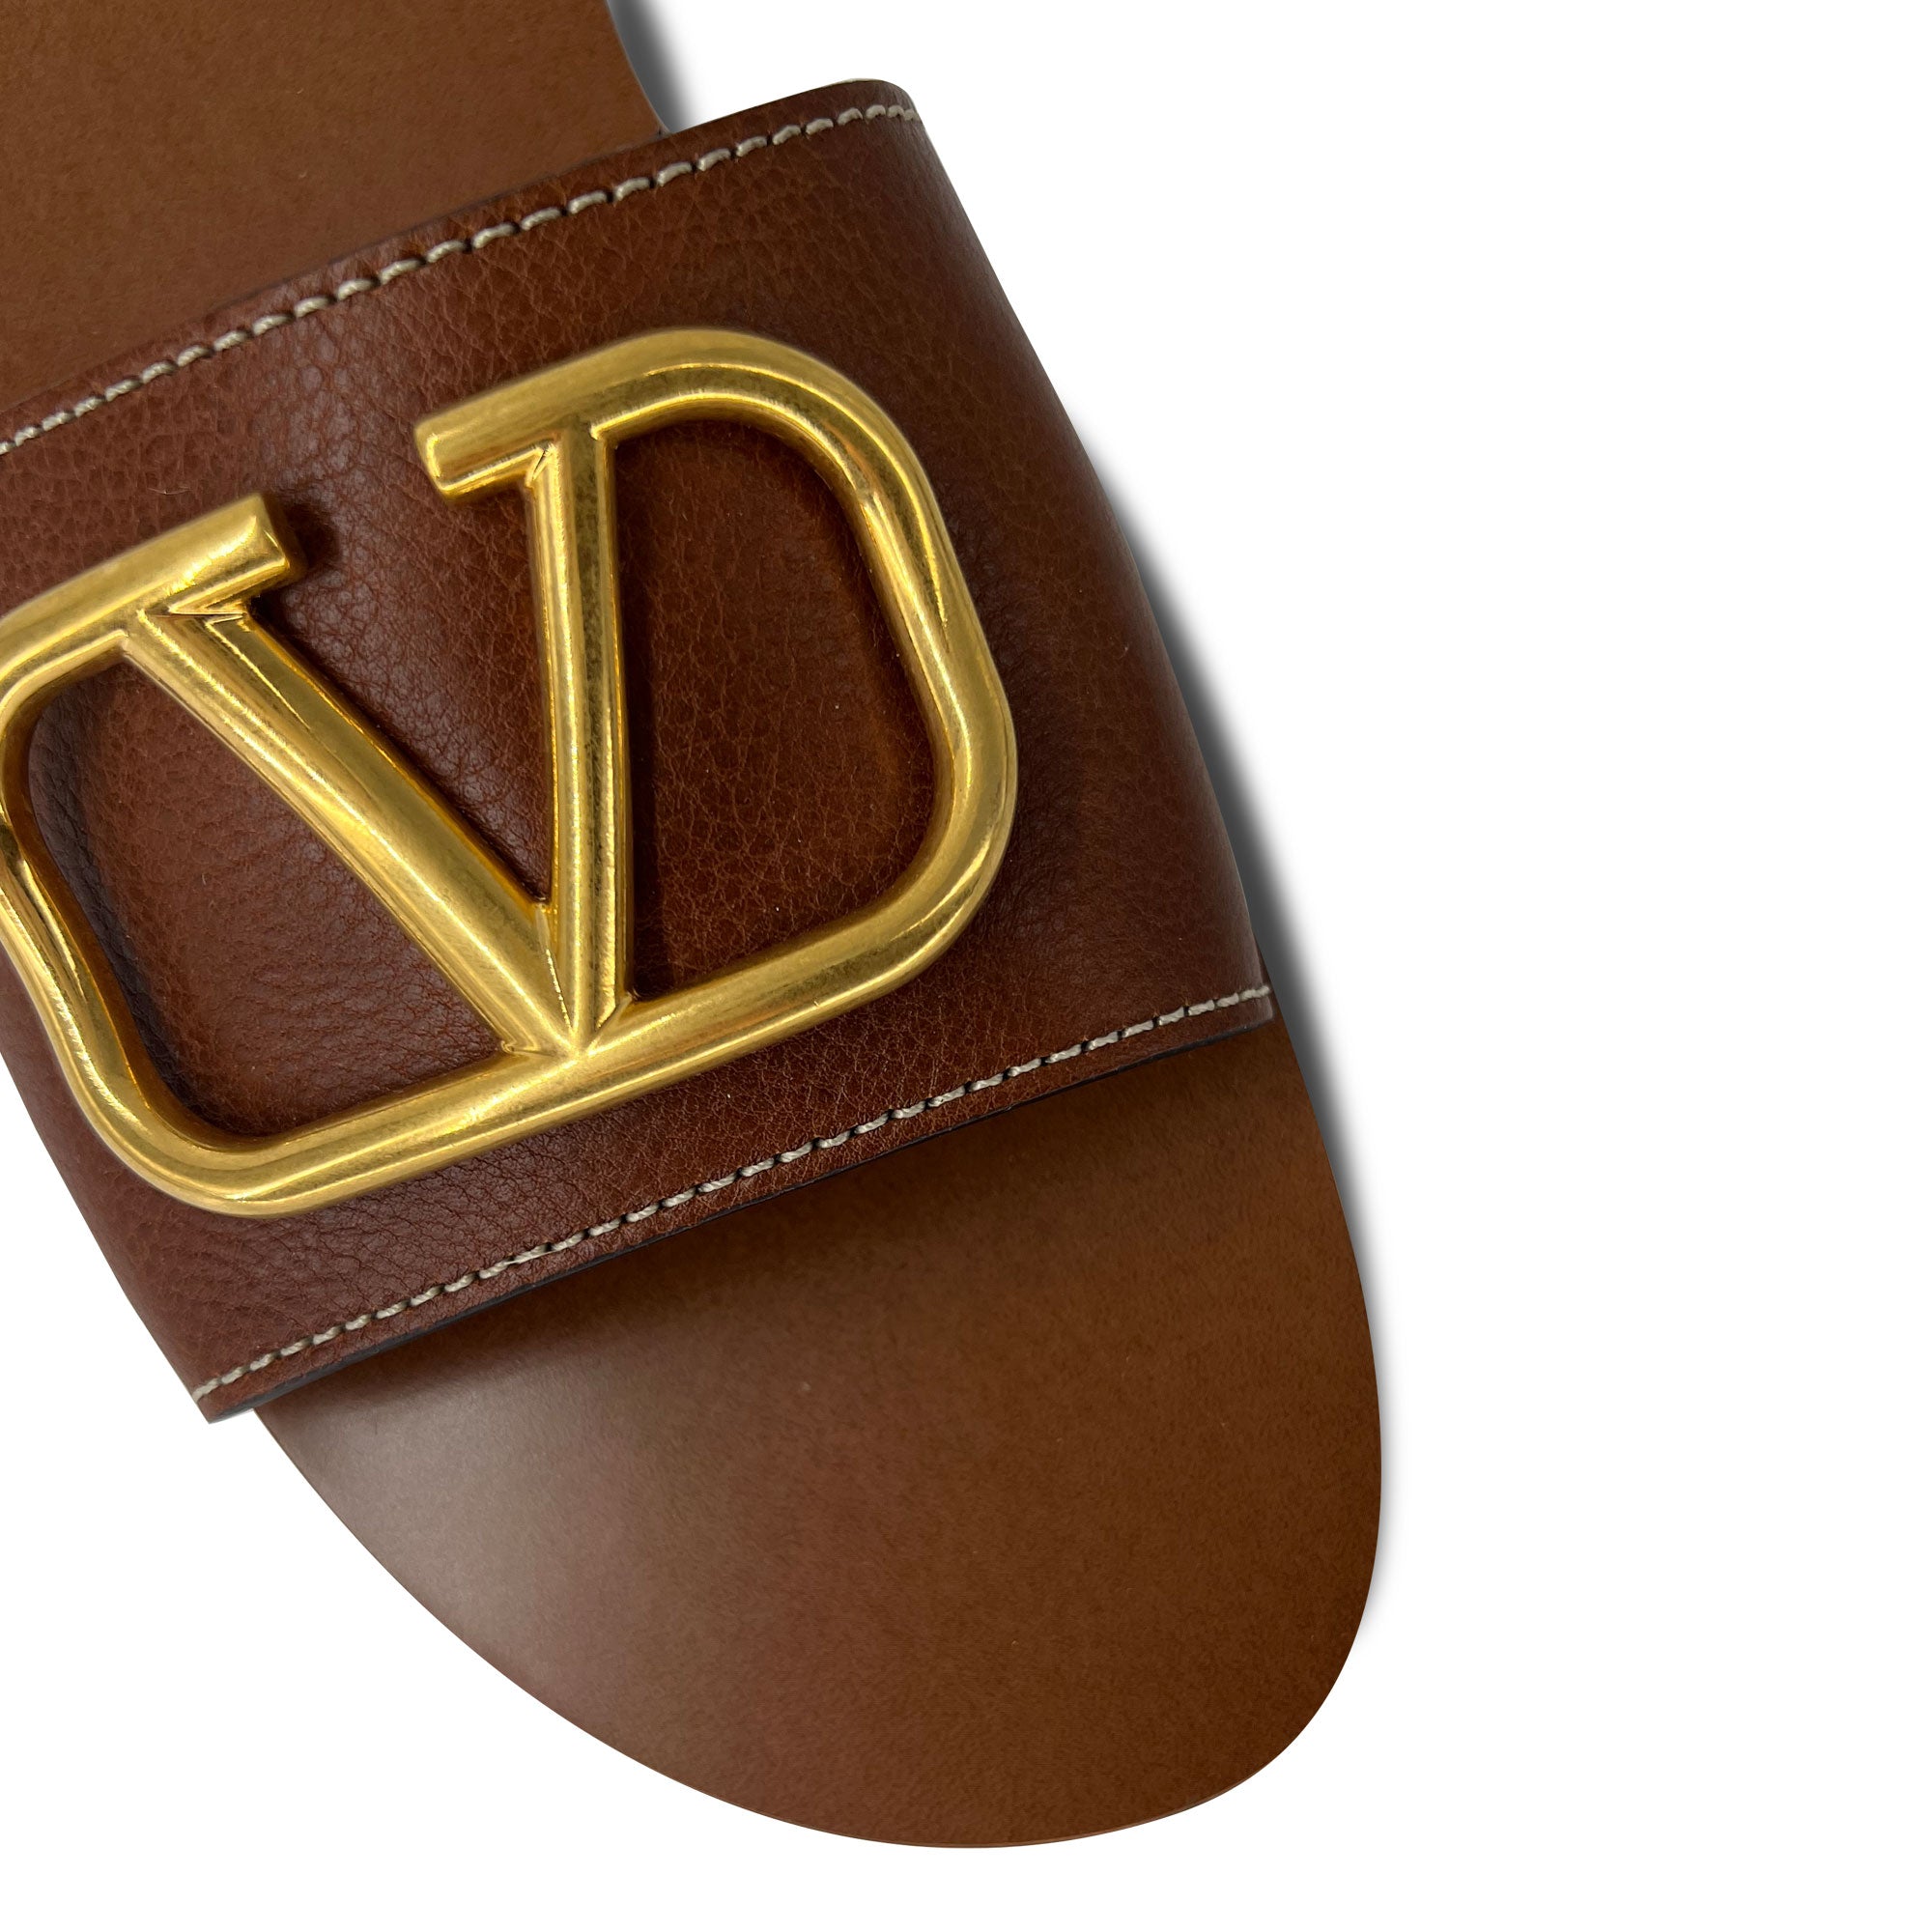 Valentino VLogo slide sandals